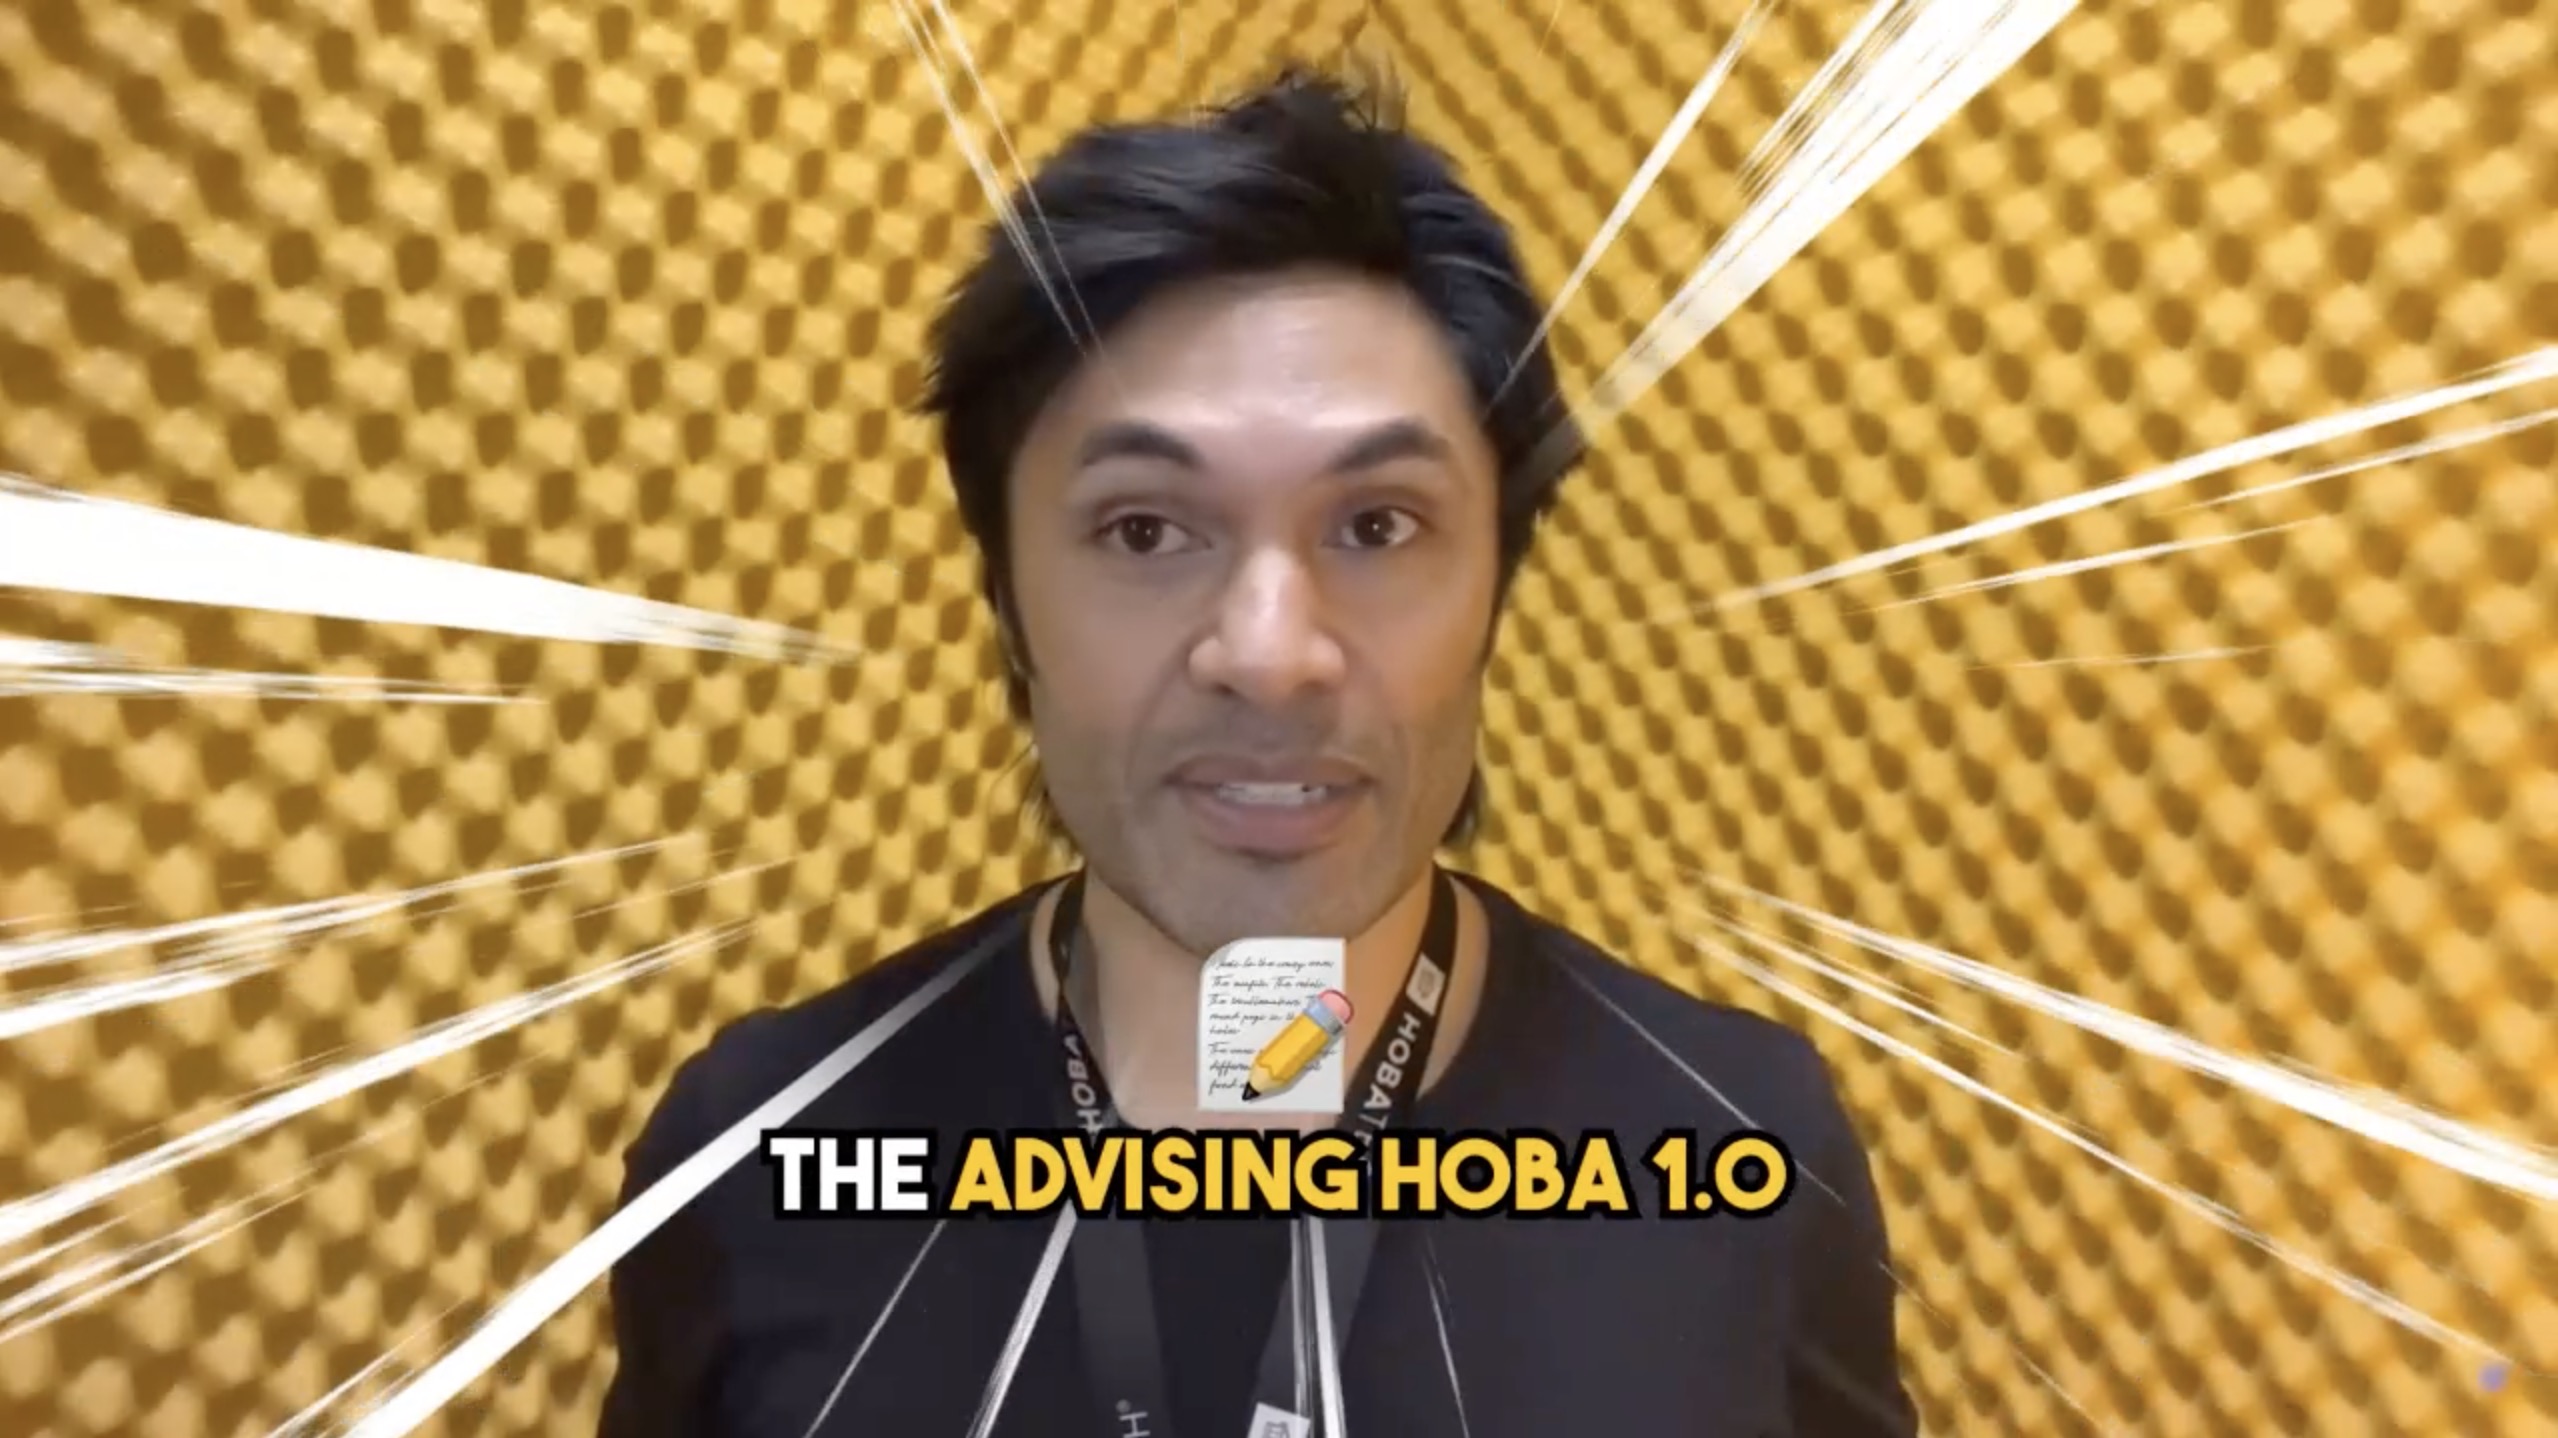 Advising HOBA 1.0